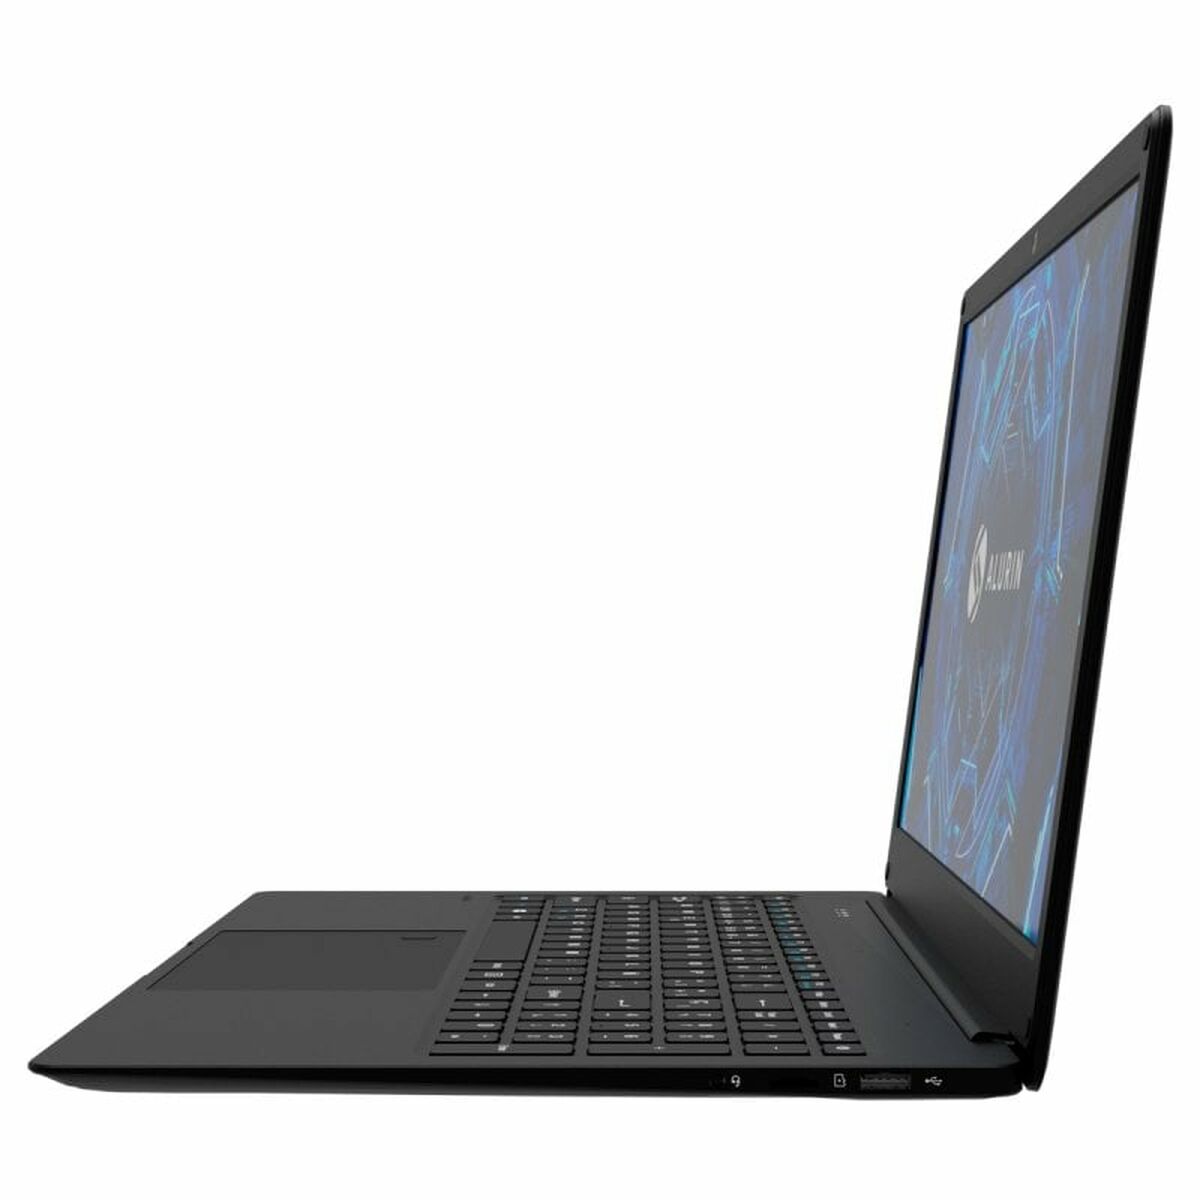 Laptop Alurin Go Start 15,6" Intel Celeron N4020 8 GB RAM 256 GB SSD Qwerty Spanisch - CA International  